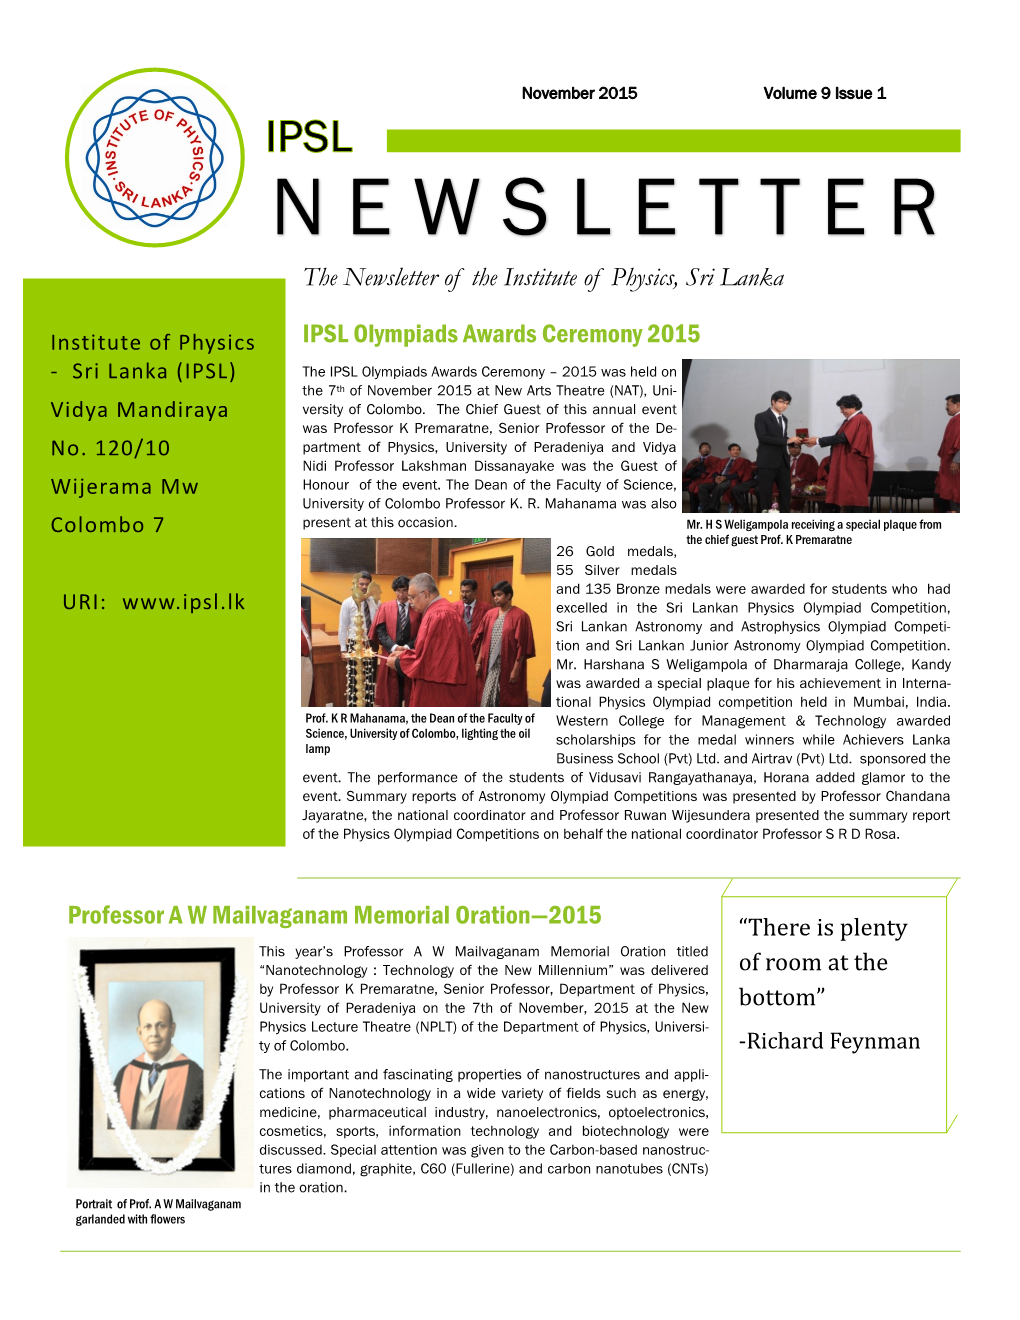 N E W S L E T T E R the Newsletter of the Institute of Physics, Sri Lanka